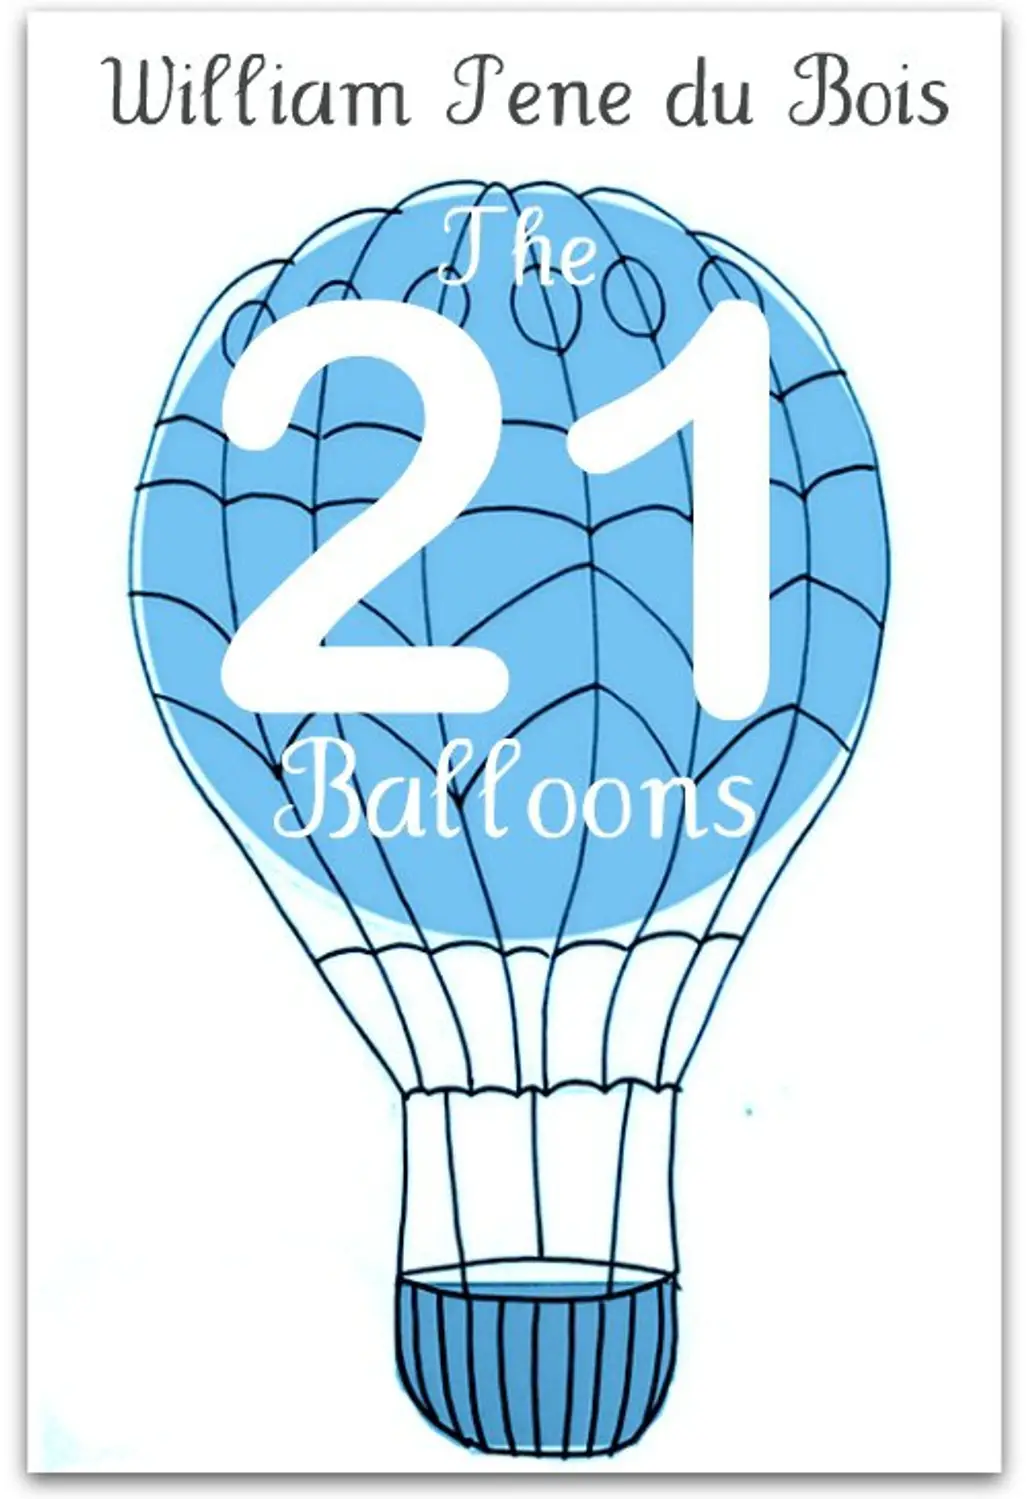 The Twenty-One Balloons by William Pene De Bois